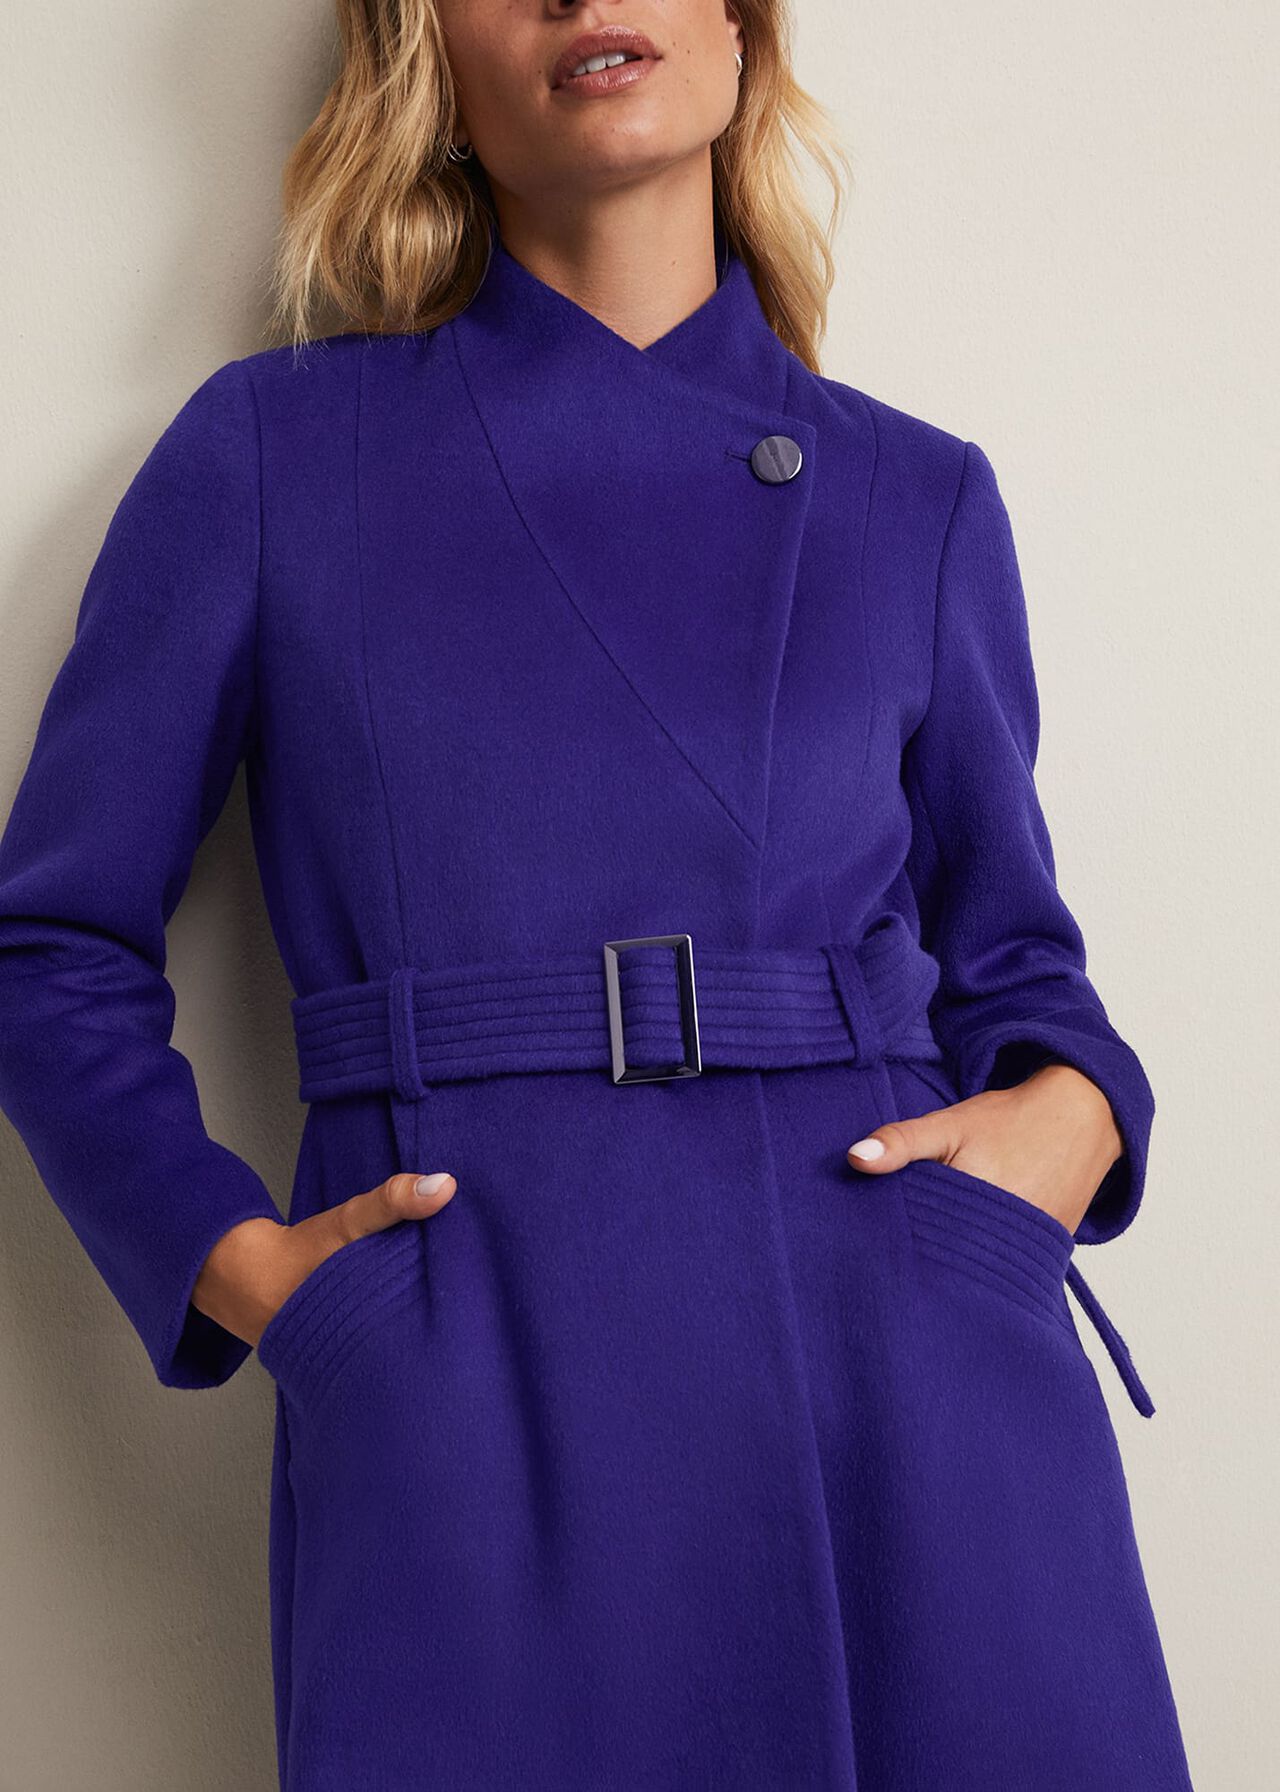 Susanna Purple Wool Coat